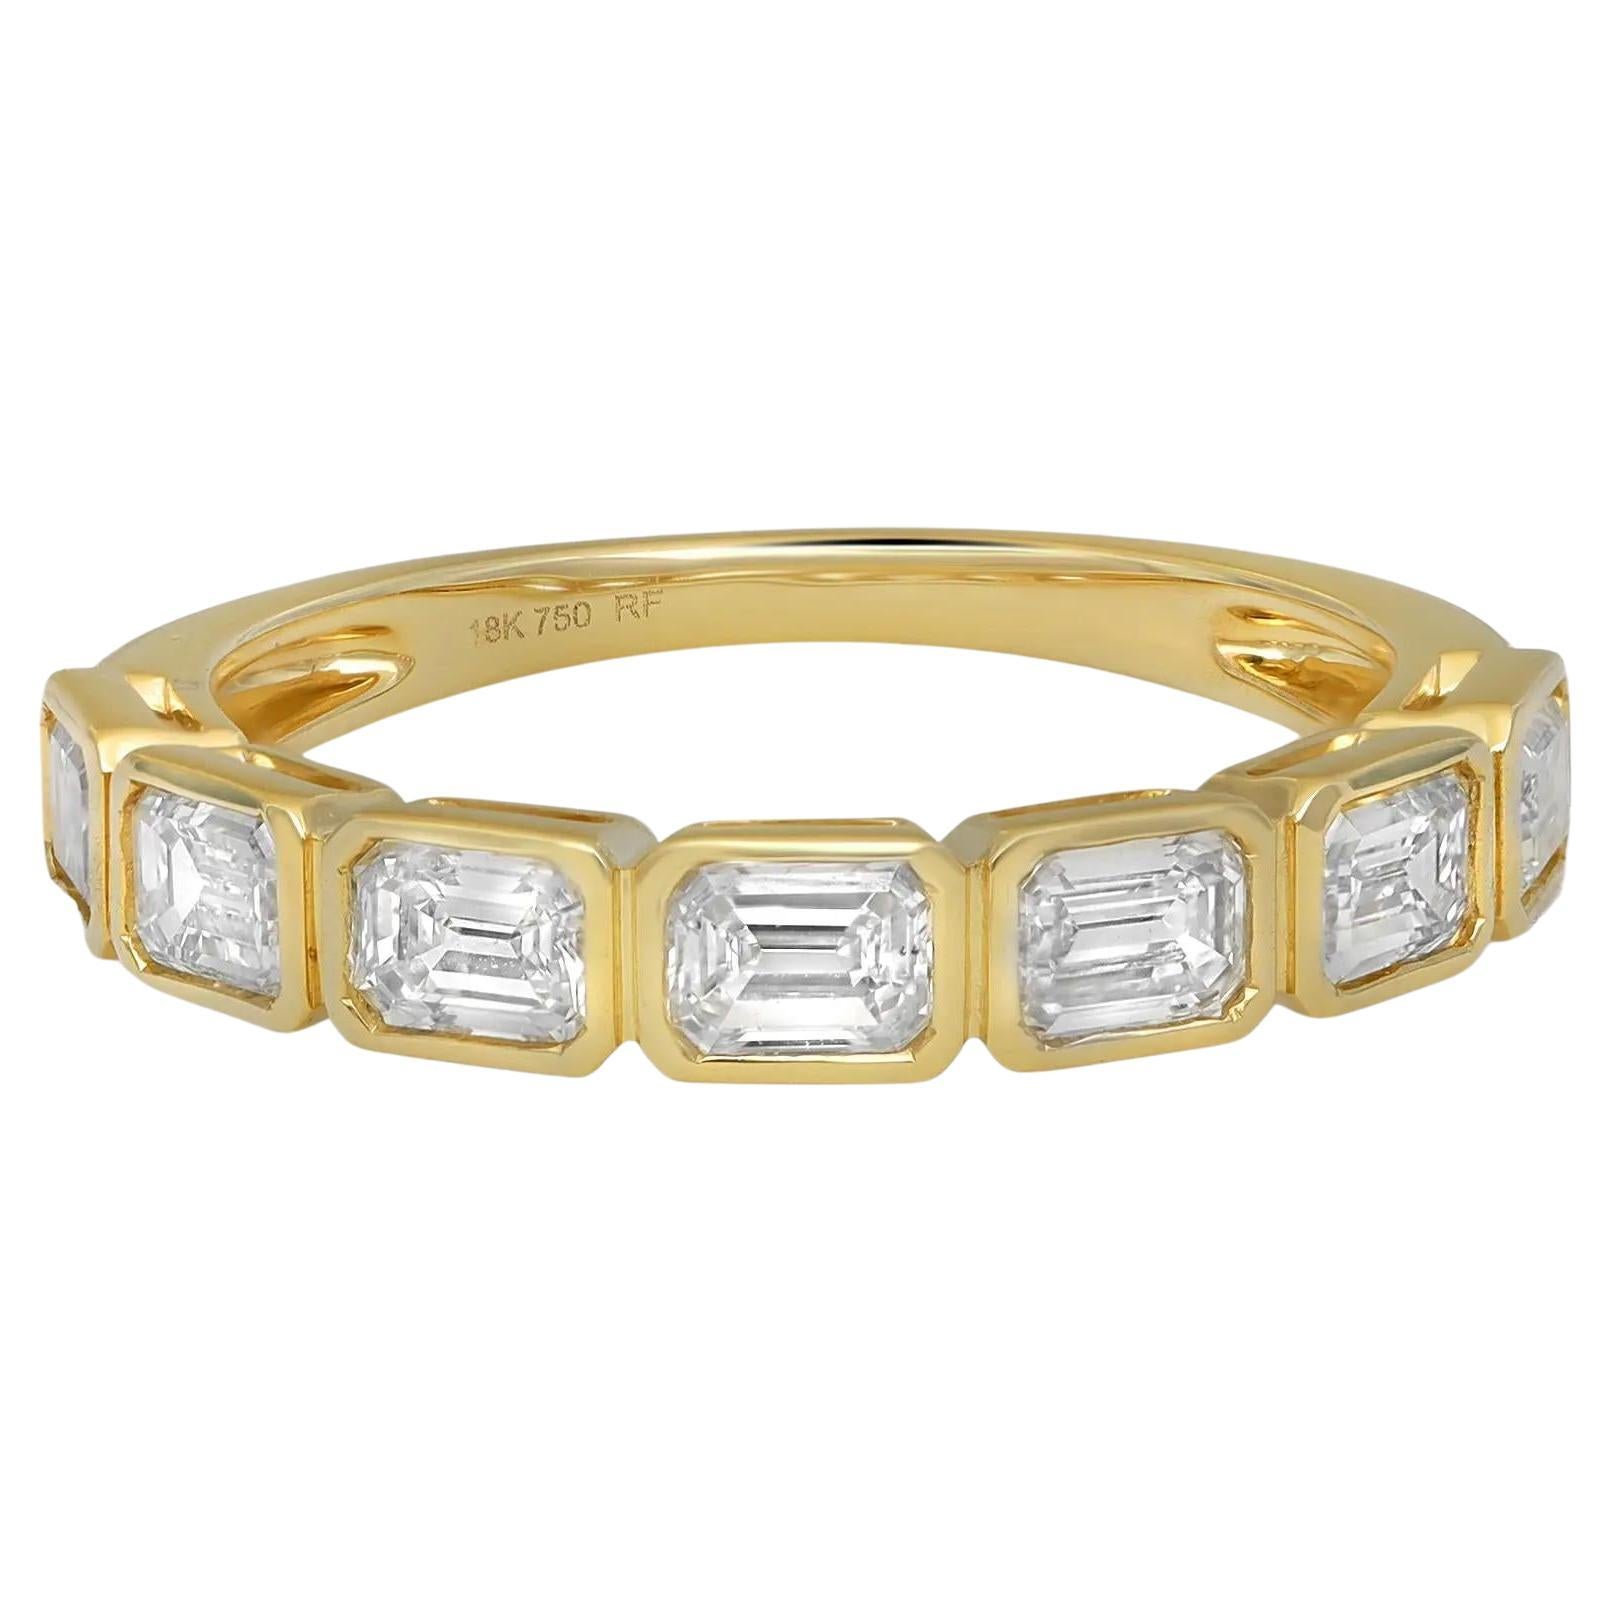 Bezel Set Emerald Cut Diamond Eternity Band Ring 18K Yellow Gold 1.19Cttw Size 6